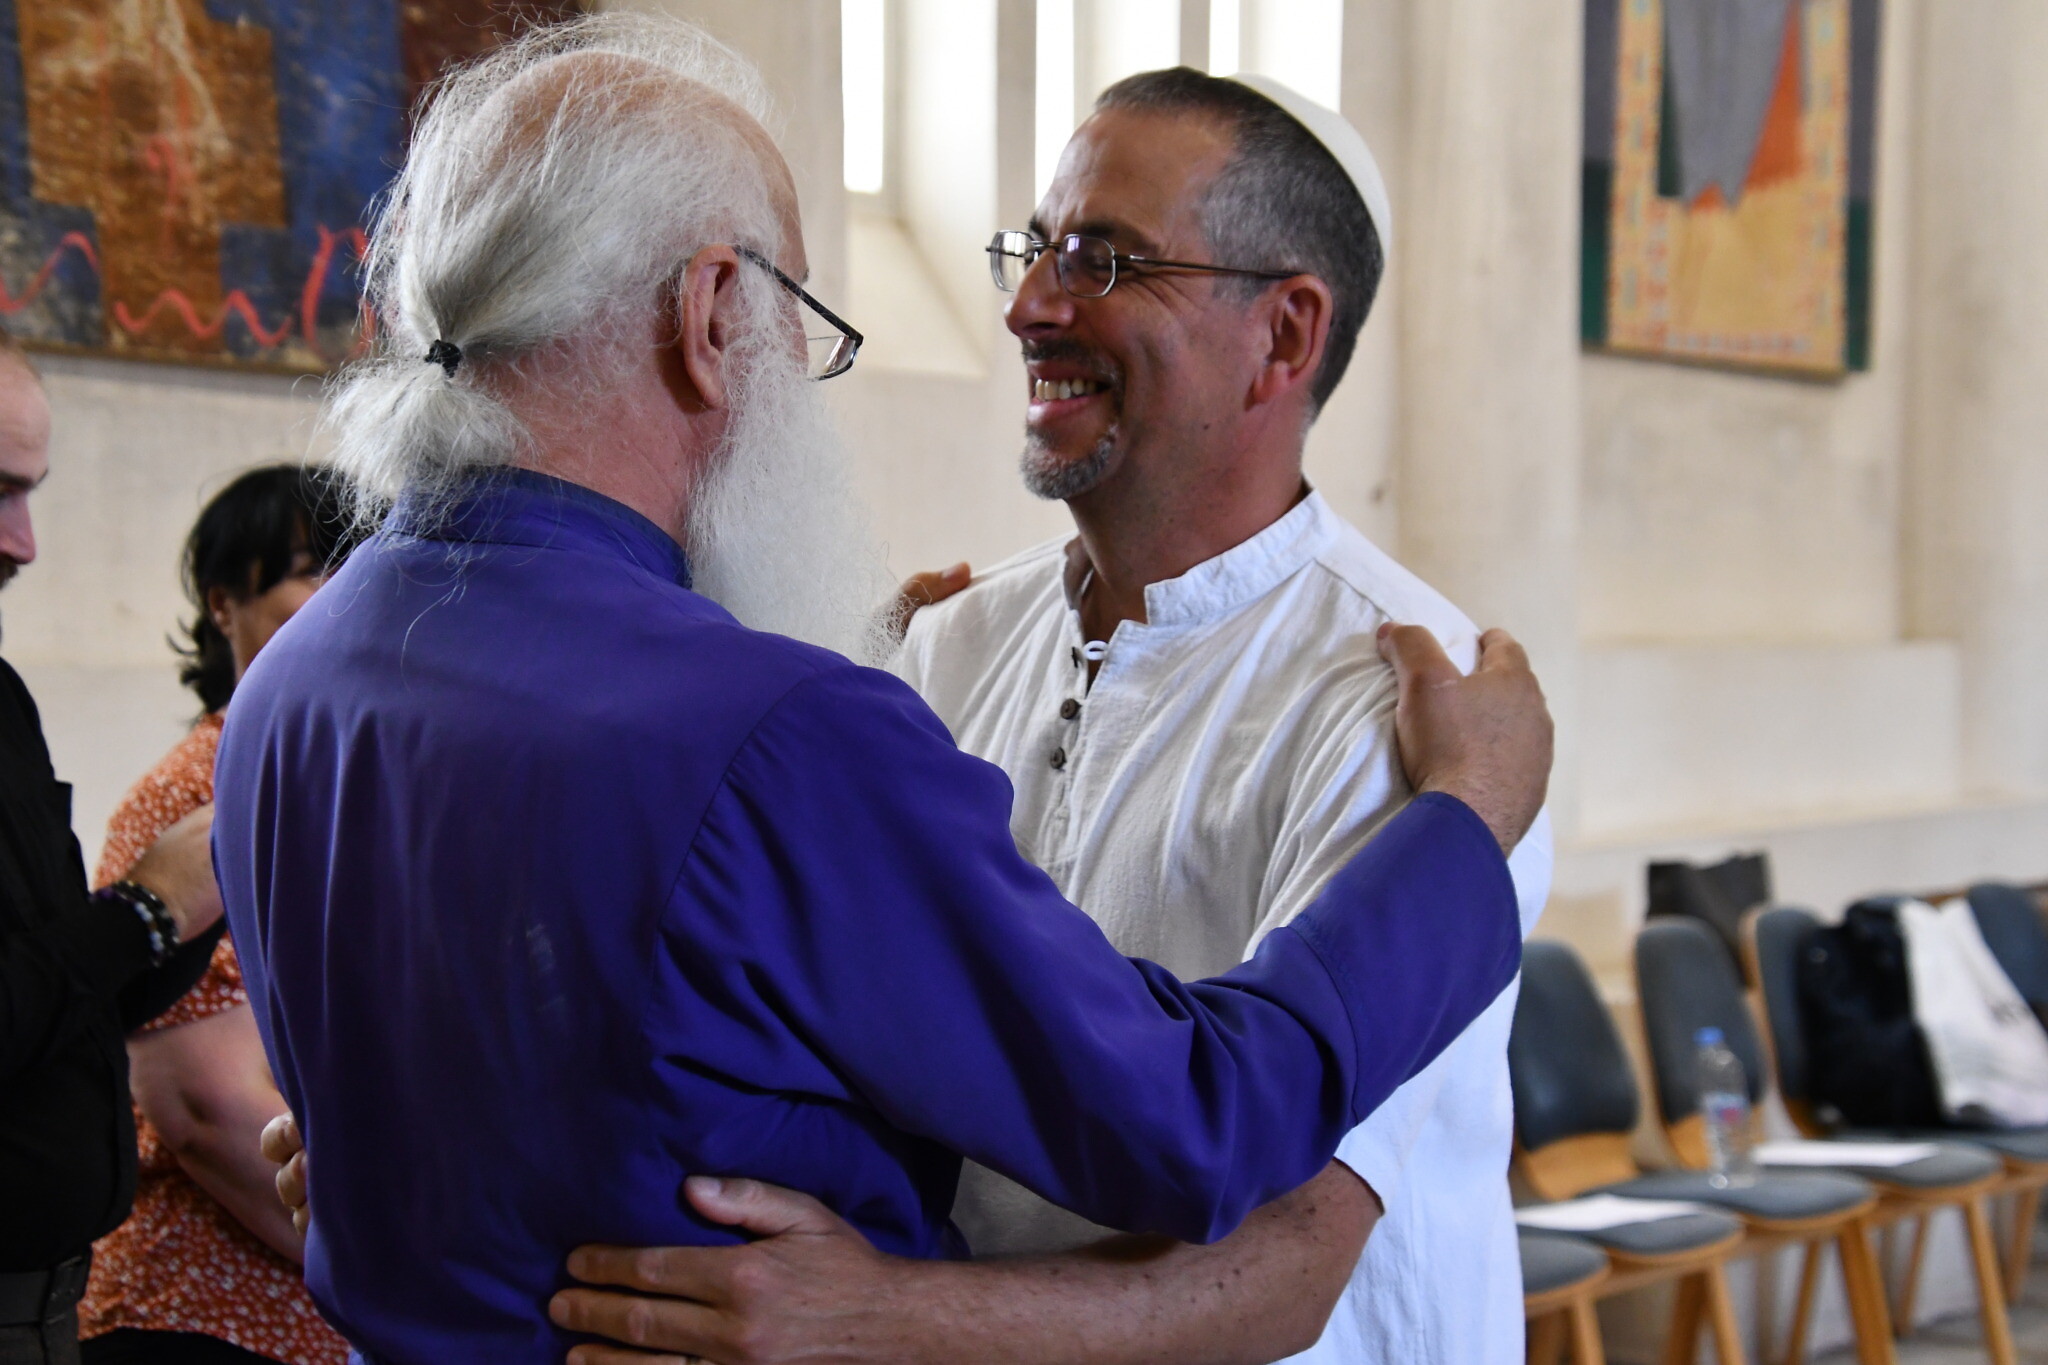 Le rabbin Golan Ben-Chorin et l'évêque Malkhaz Songulashvili s'embrassent dans la cathédrale de la paix. (Crédit : Nano Saralishvili/ via JTA)